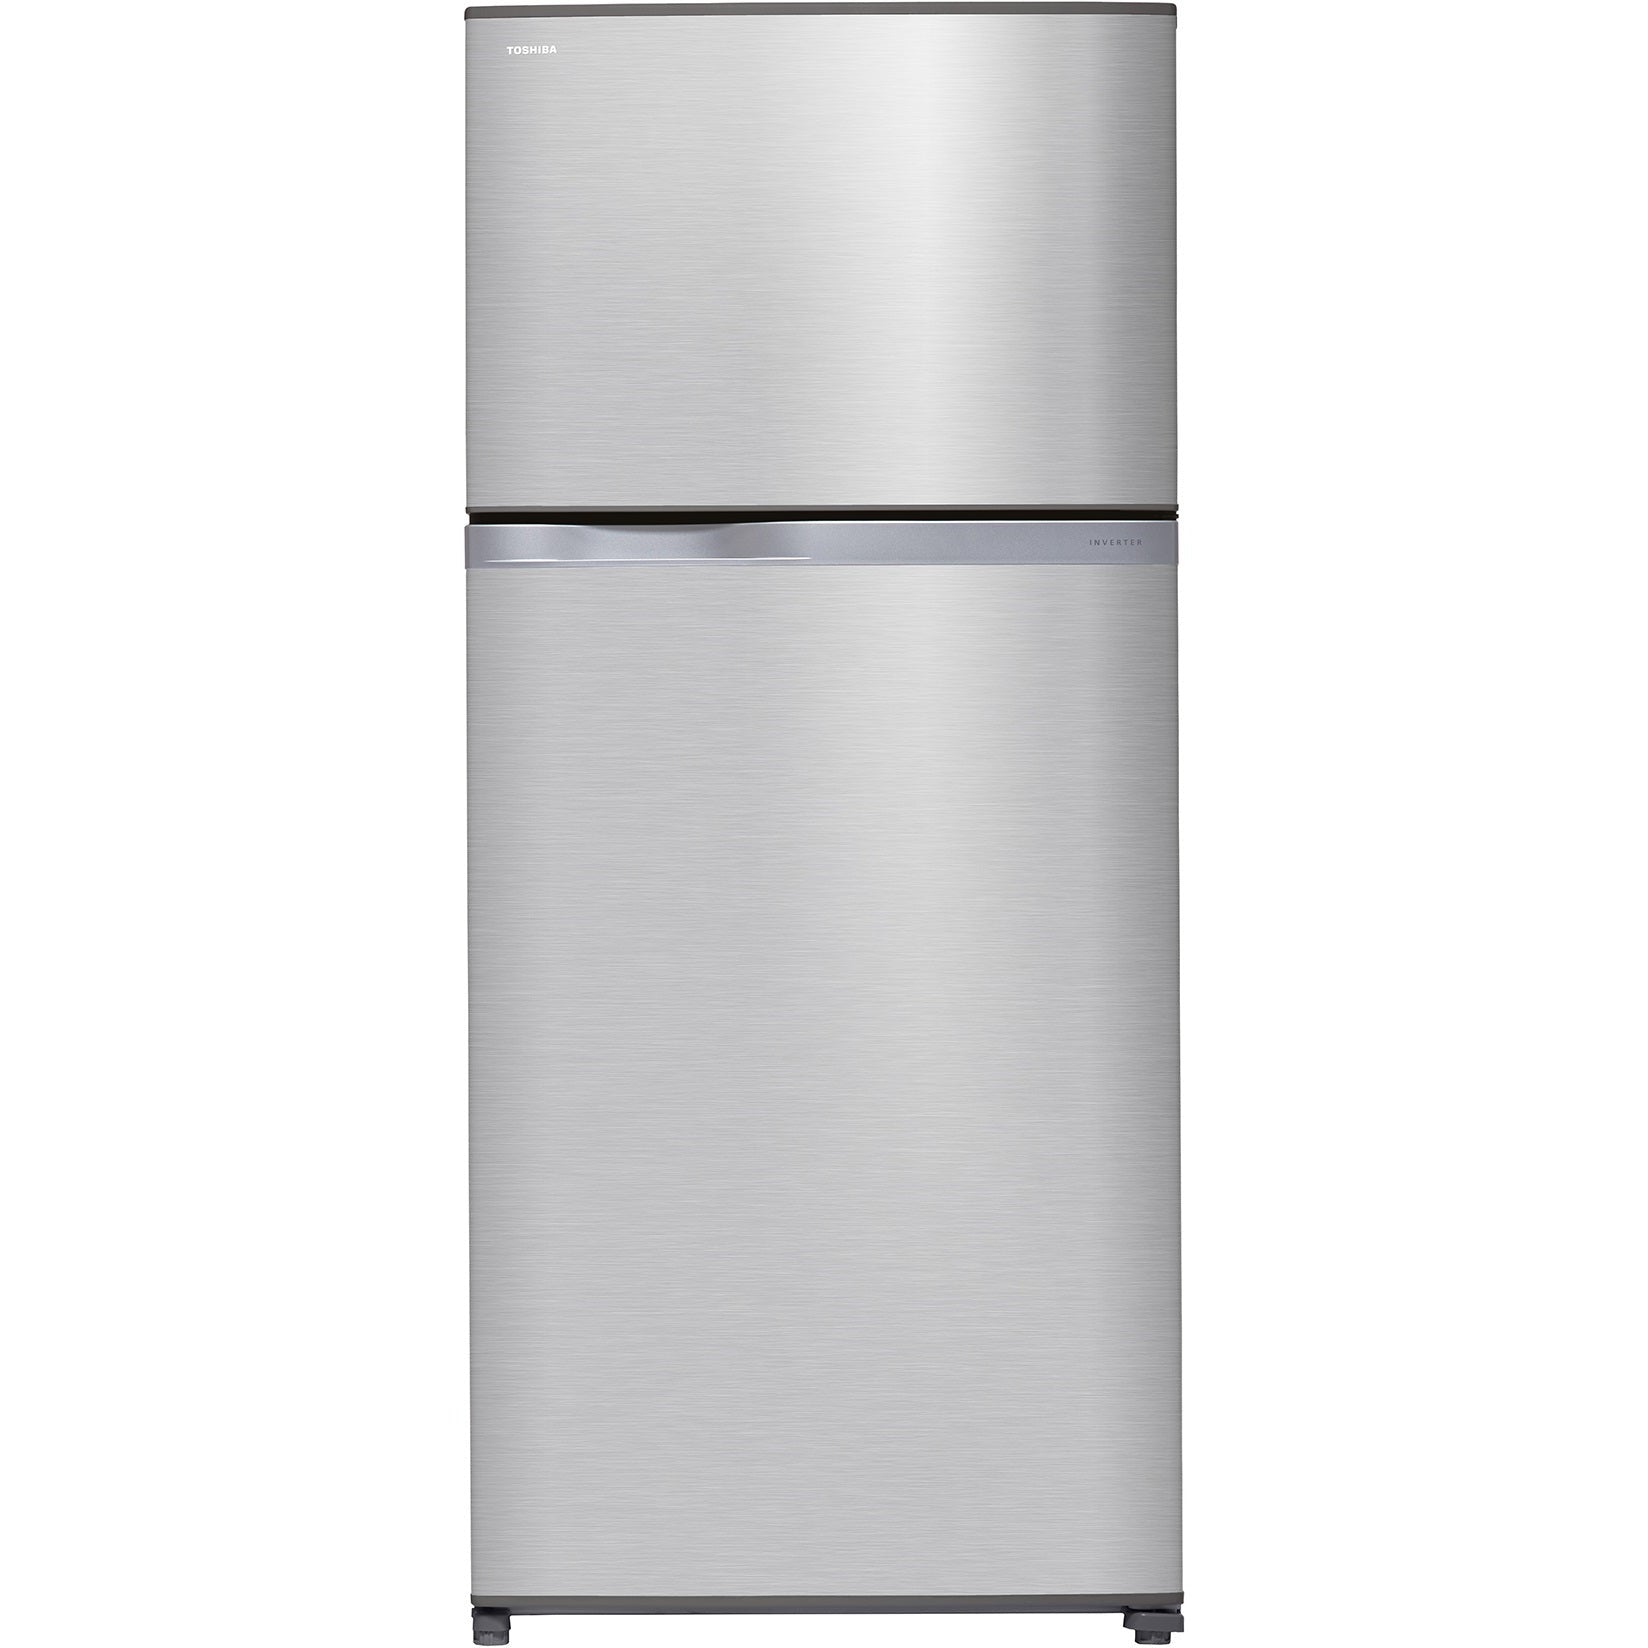 TOSHIBA Refrigerator 554 Liters A++ - Silver GR-A720(S)